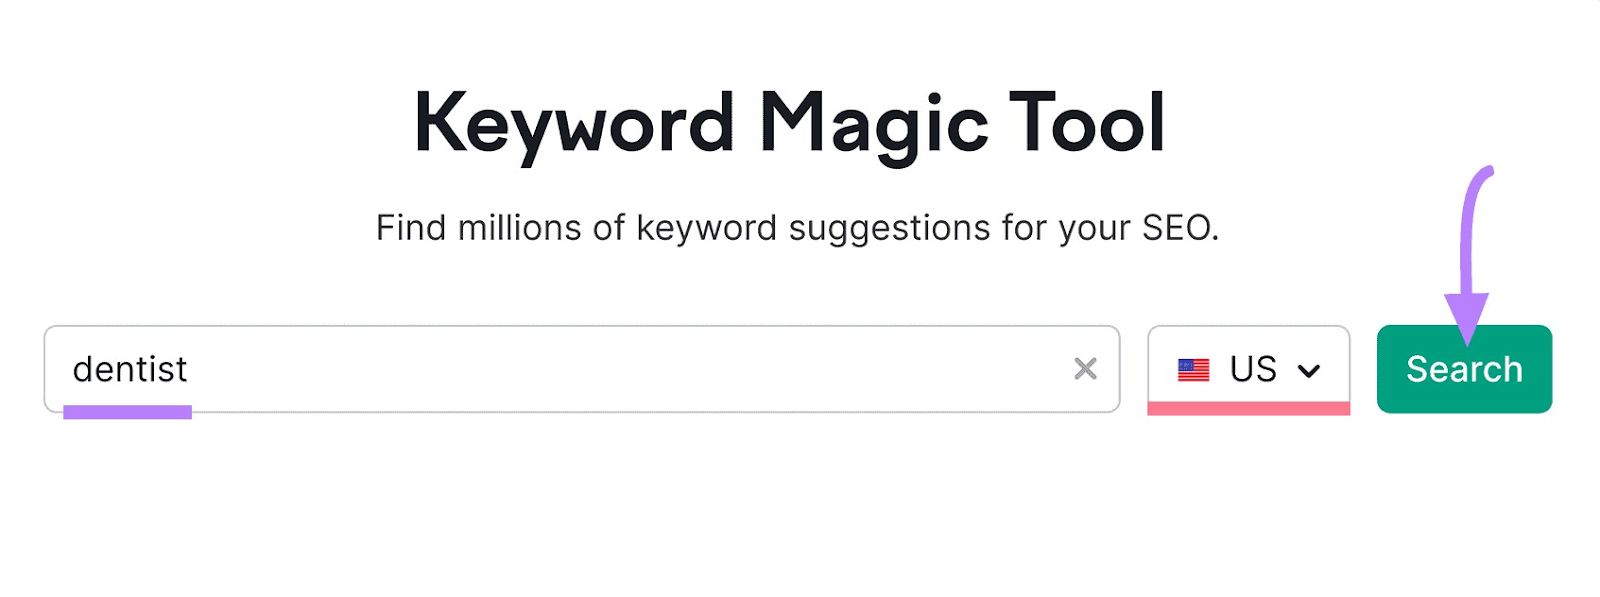 "dentist" entered into the Keyword Magic Tool search bar